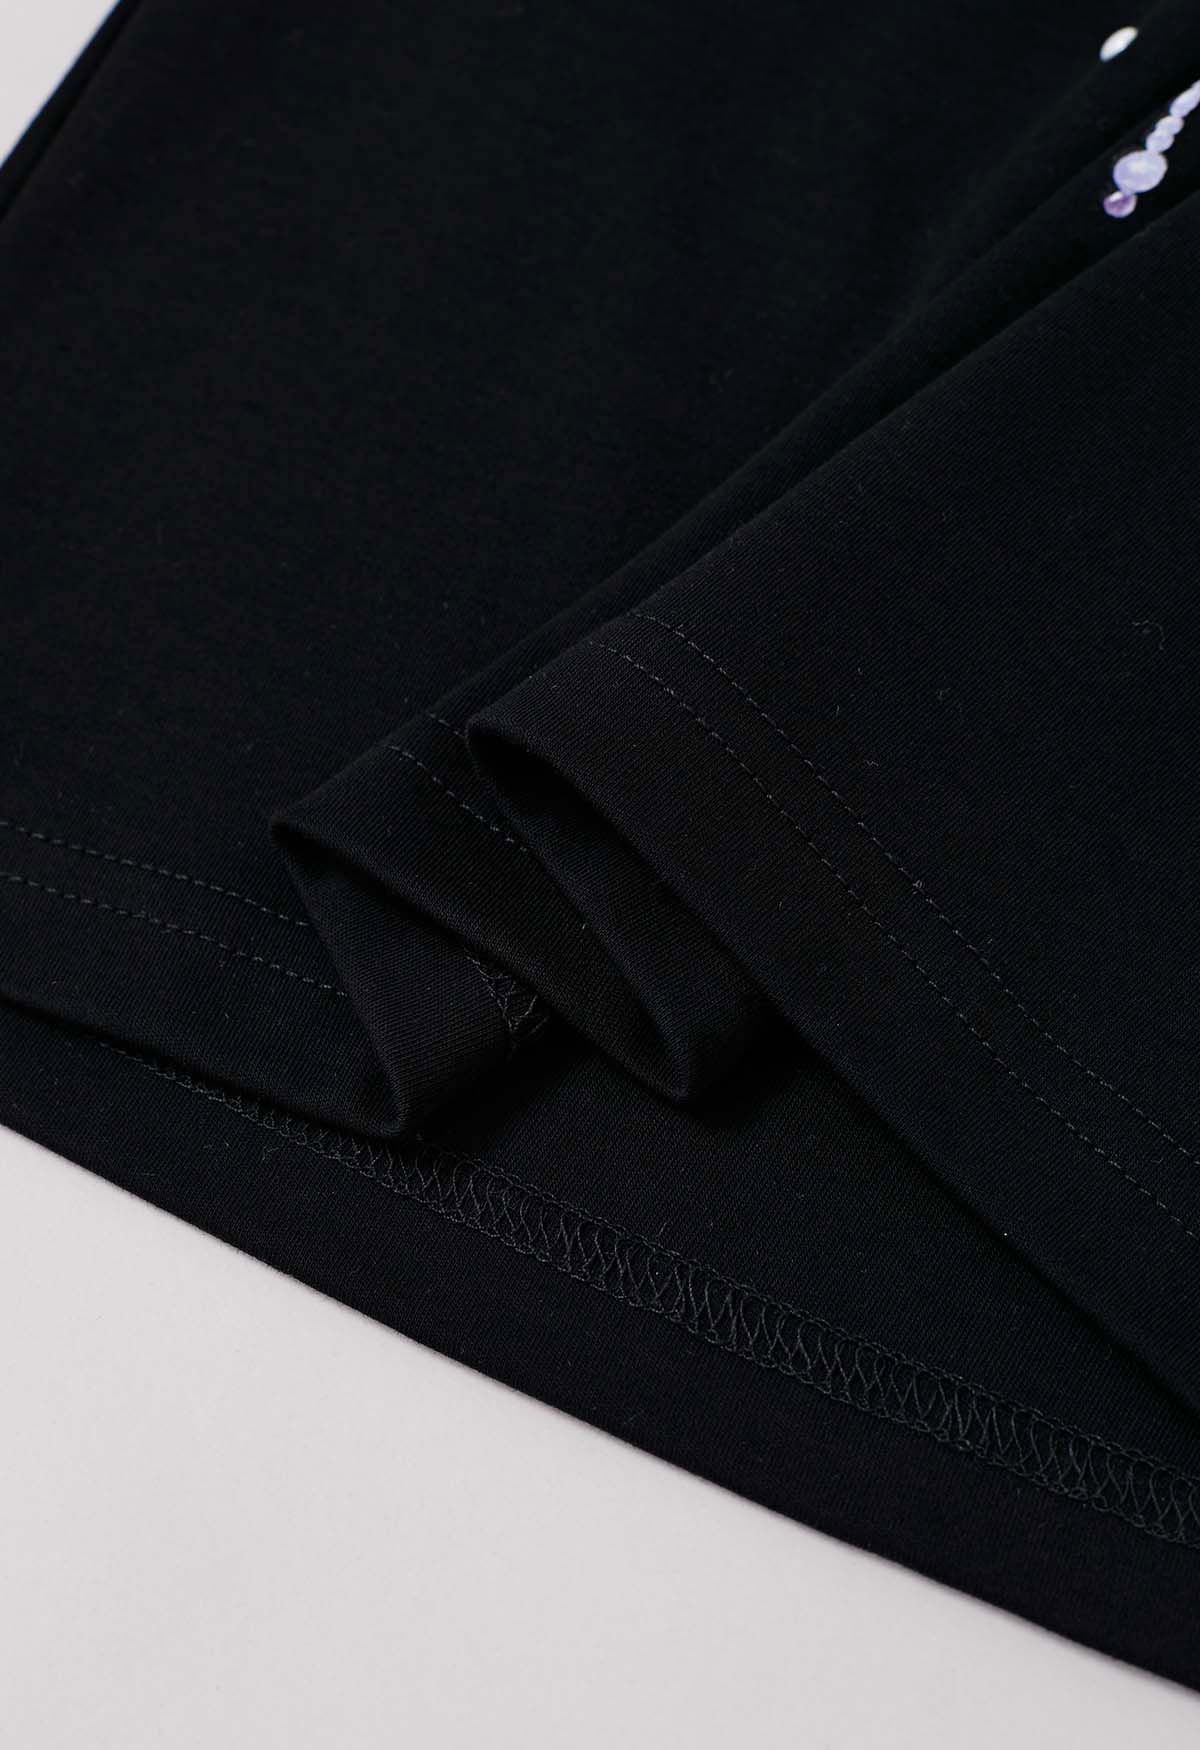 Bowknot Print Short Sleeve T-Shirt in Black